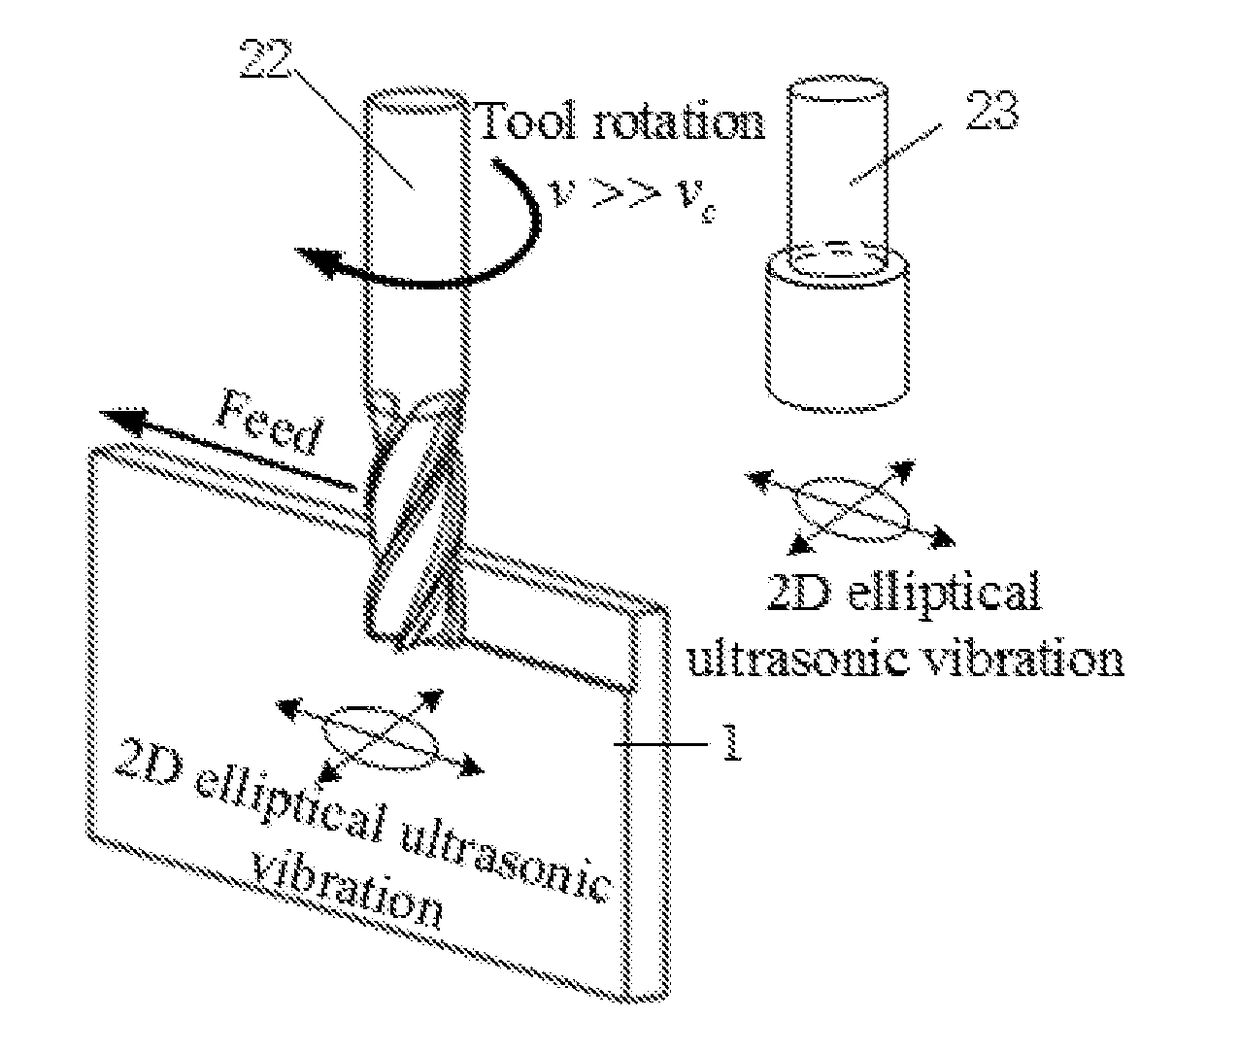 High-speed precision interrupted ultrasonic vibration cutting method